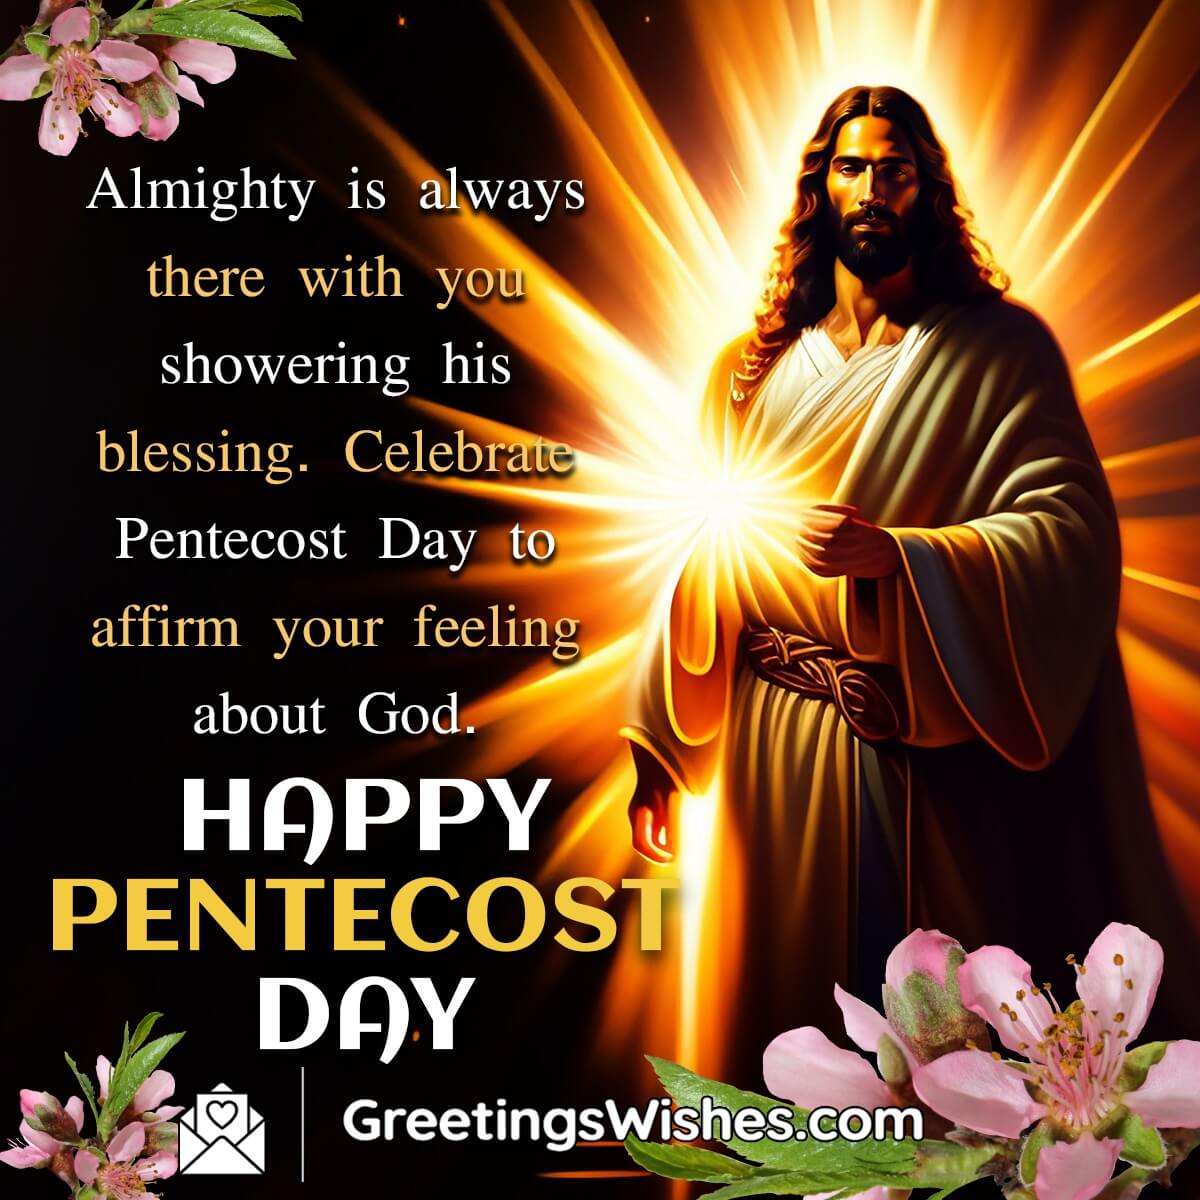 Happy Pentecost Day Wish Image